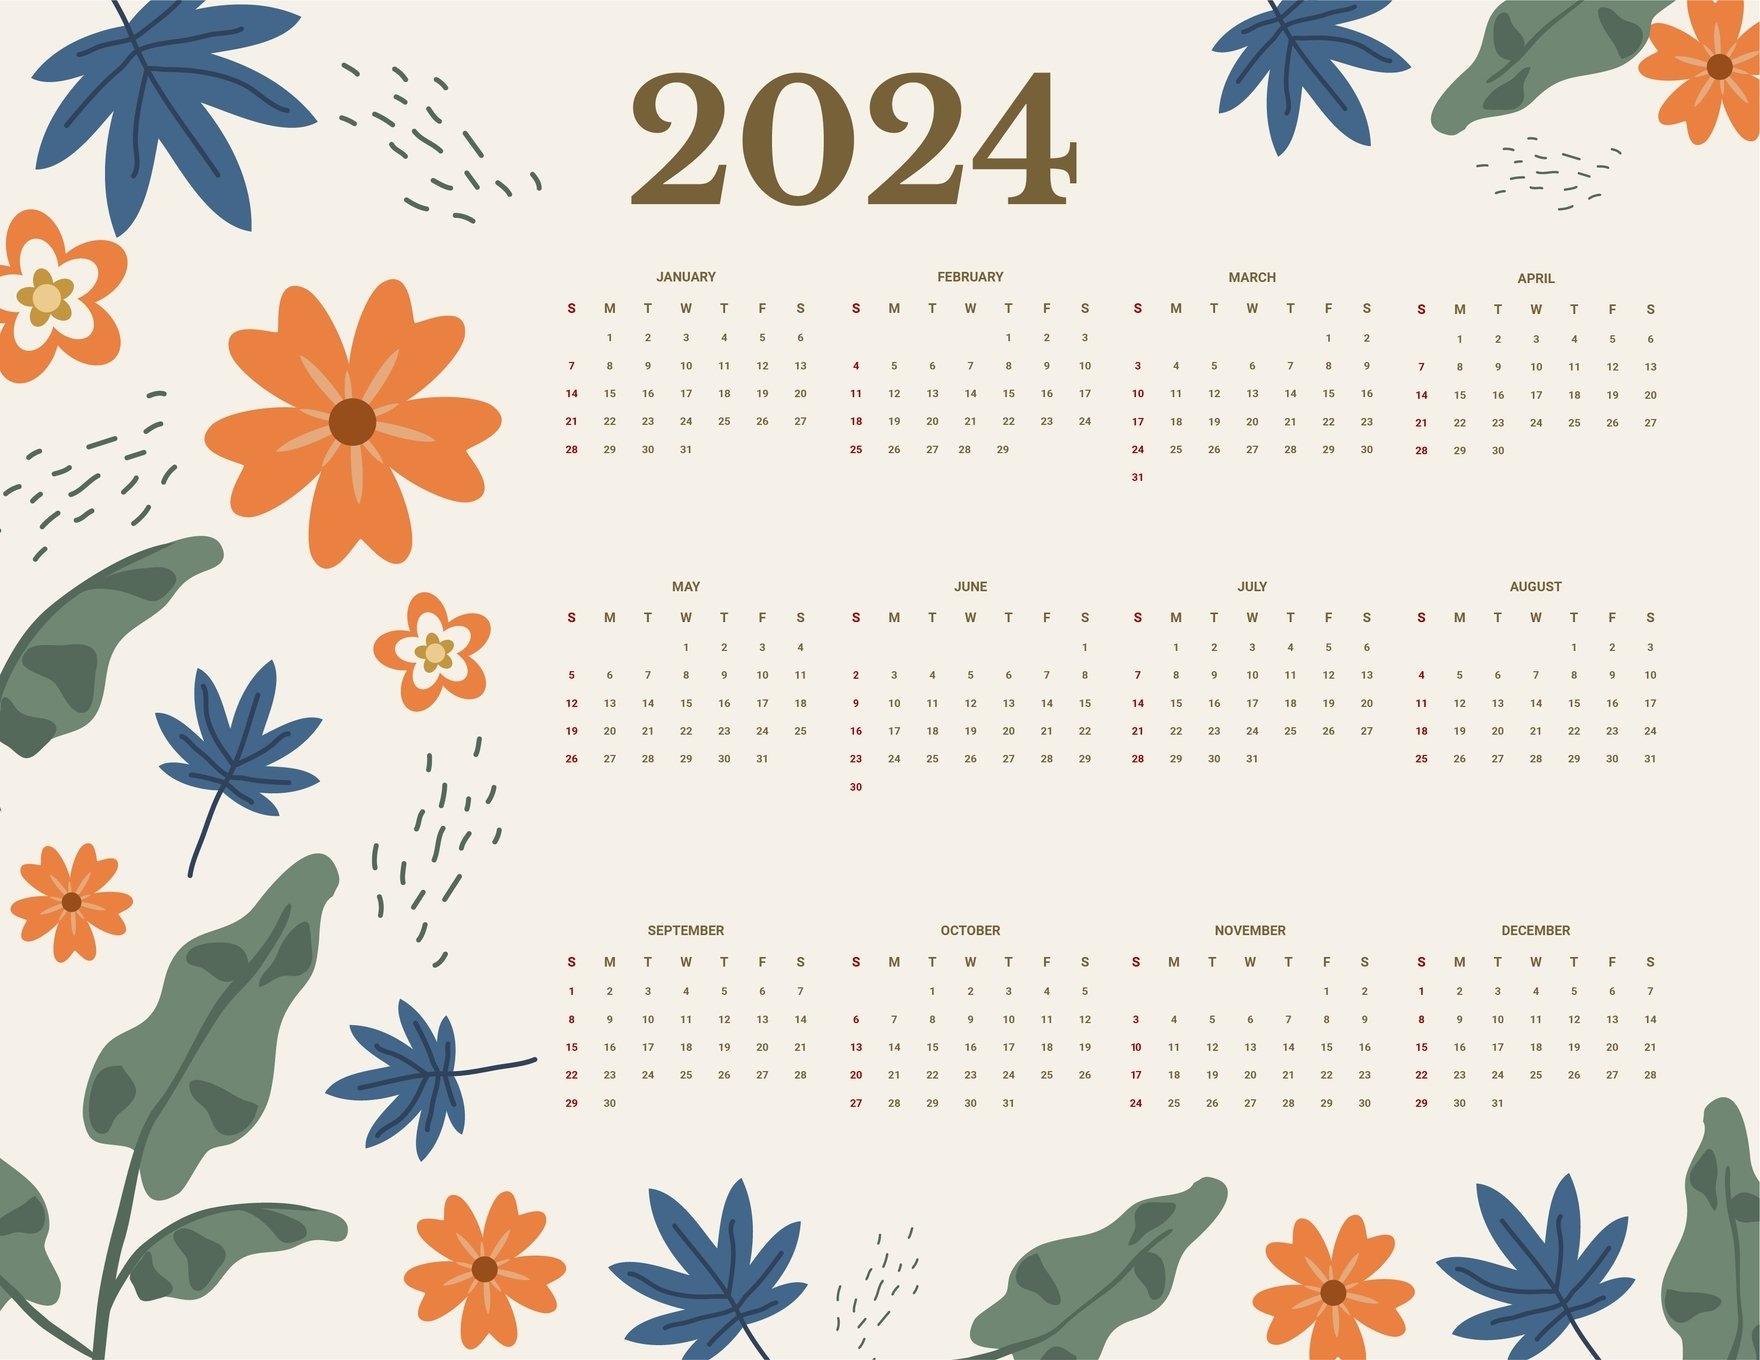 2024 Yearly Calendar Printable - Free Printable 2024 Calendar Pretty